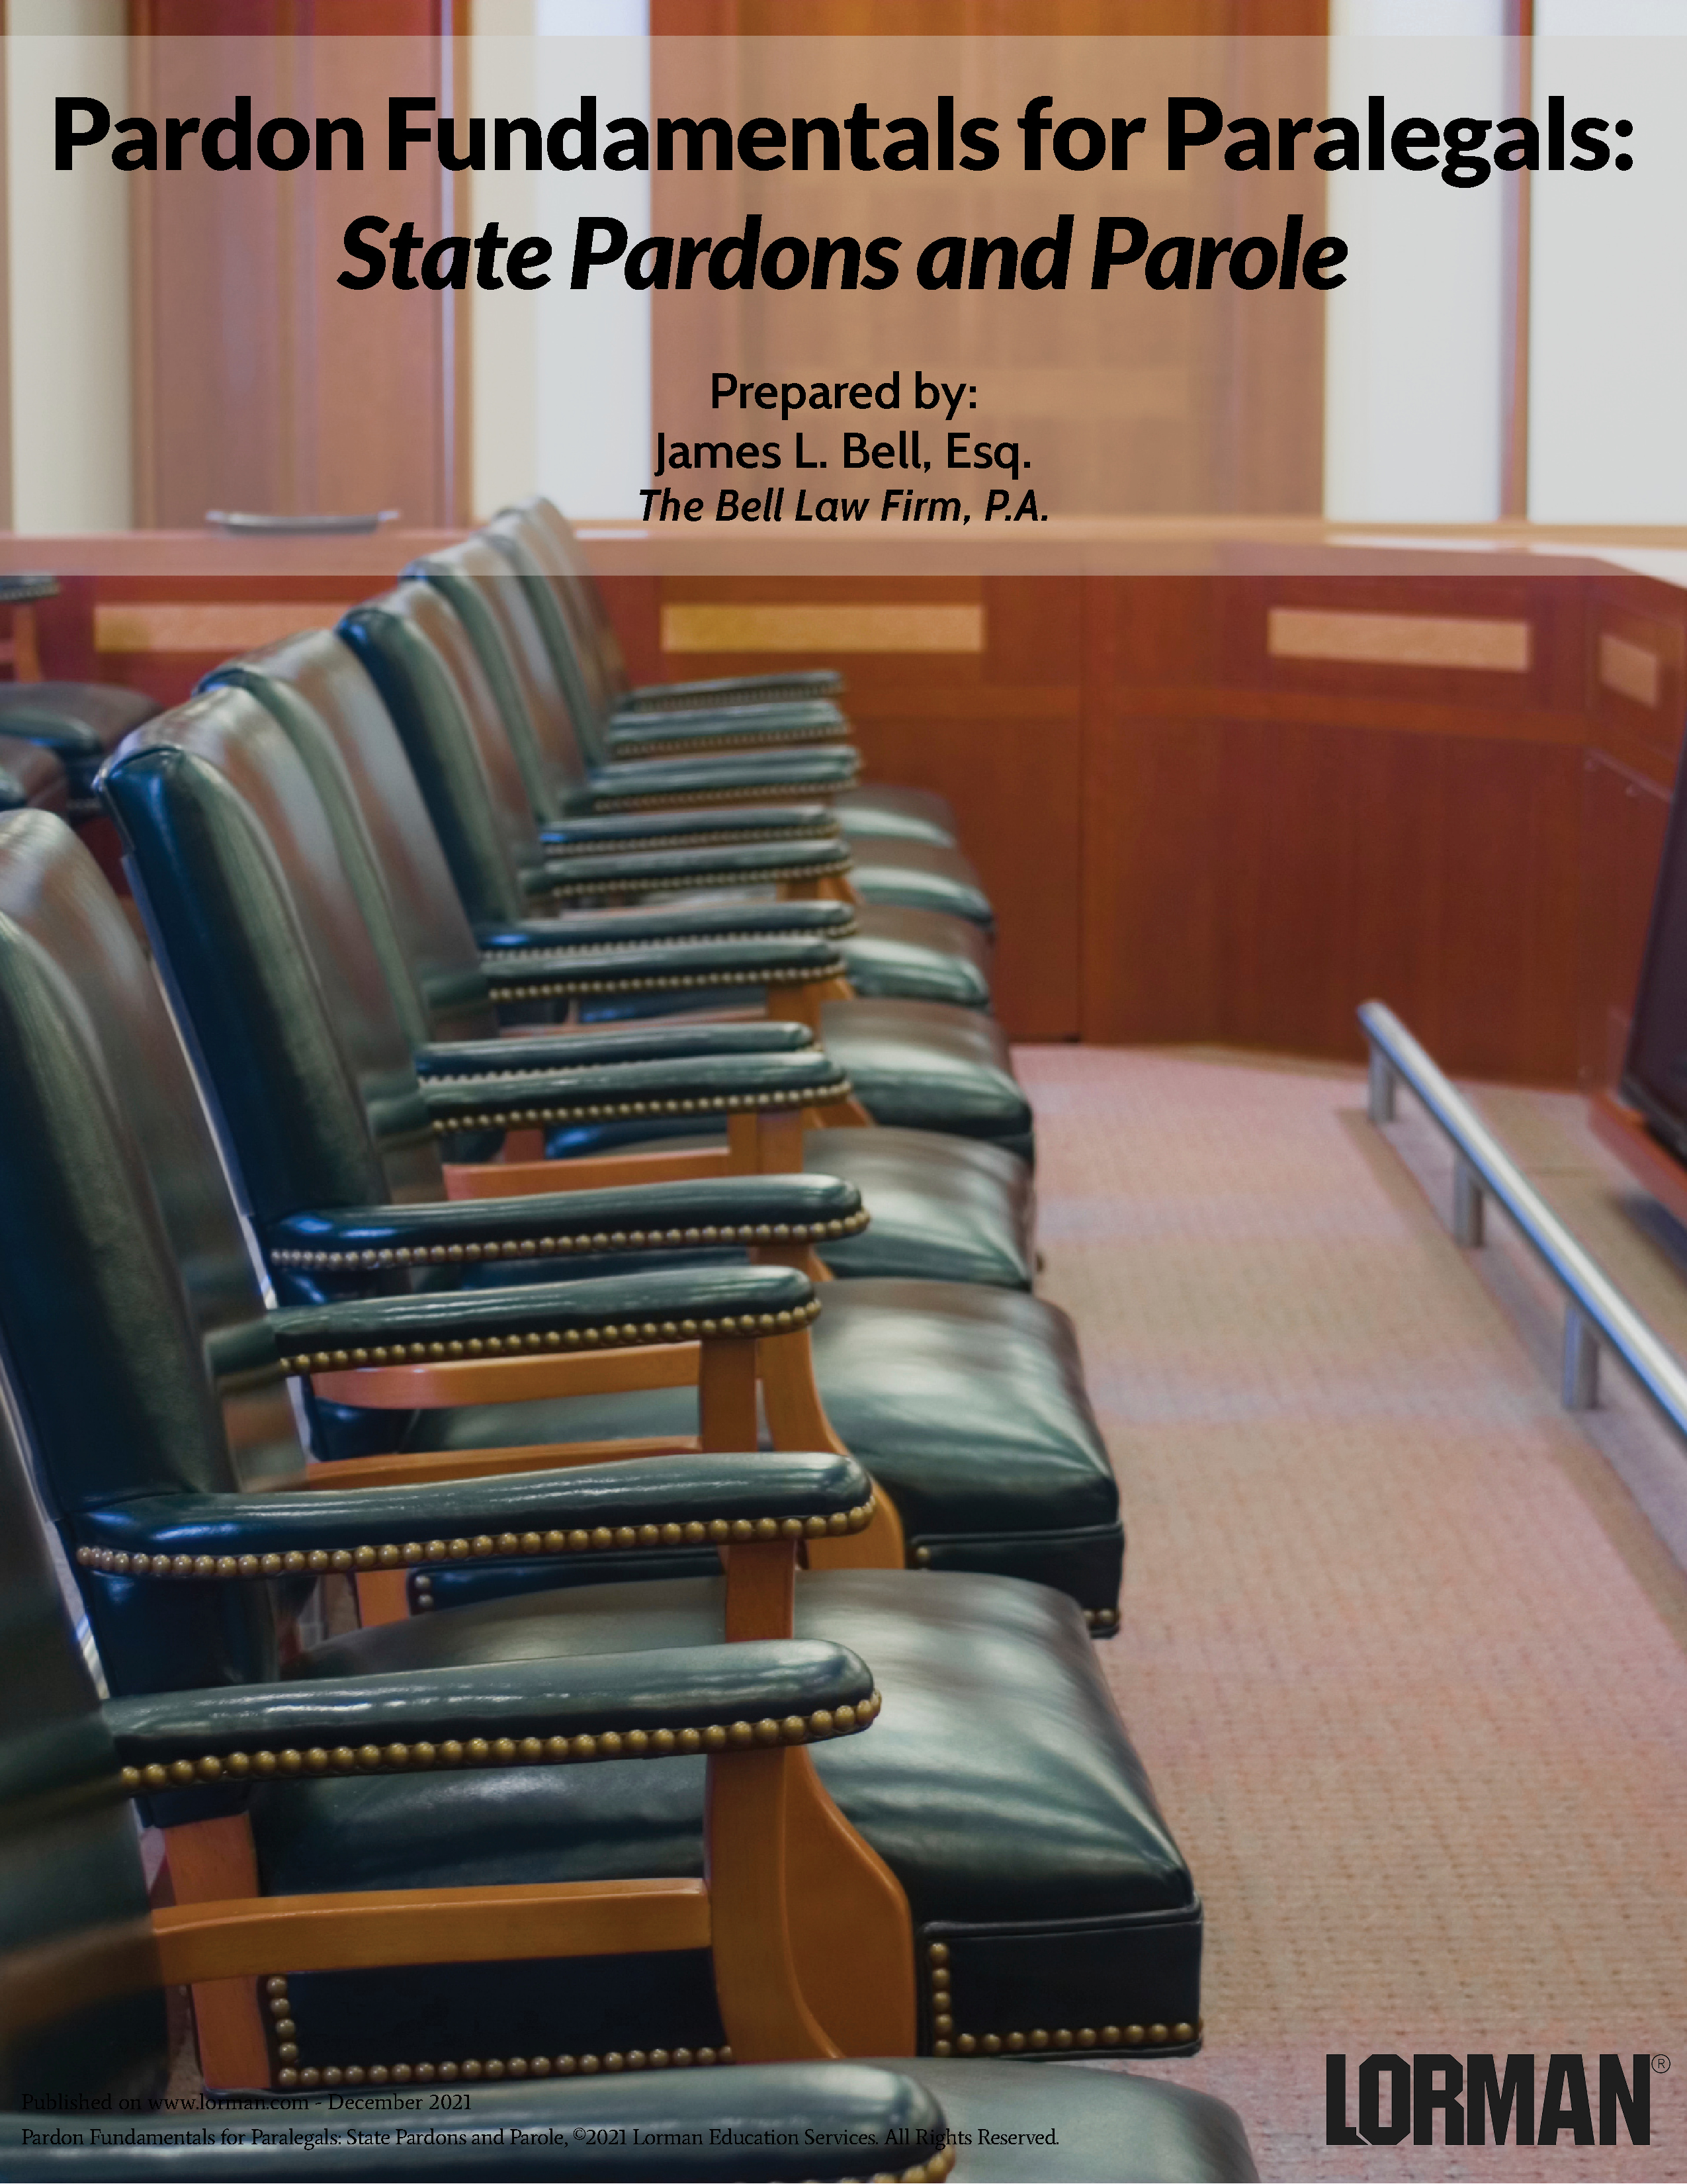 Pardon Fundamentals for Paralegals: State Pardons and Parole